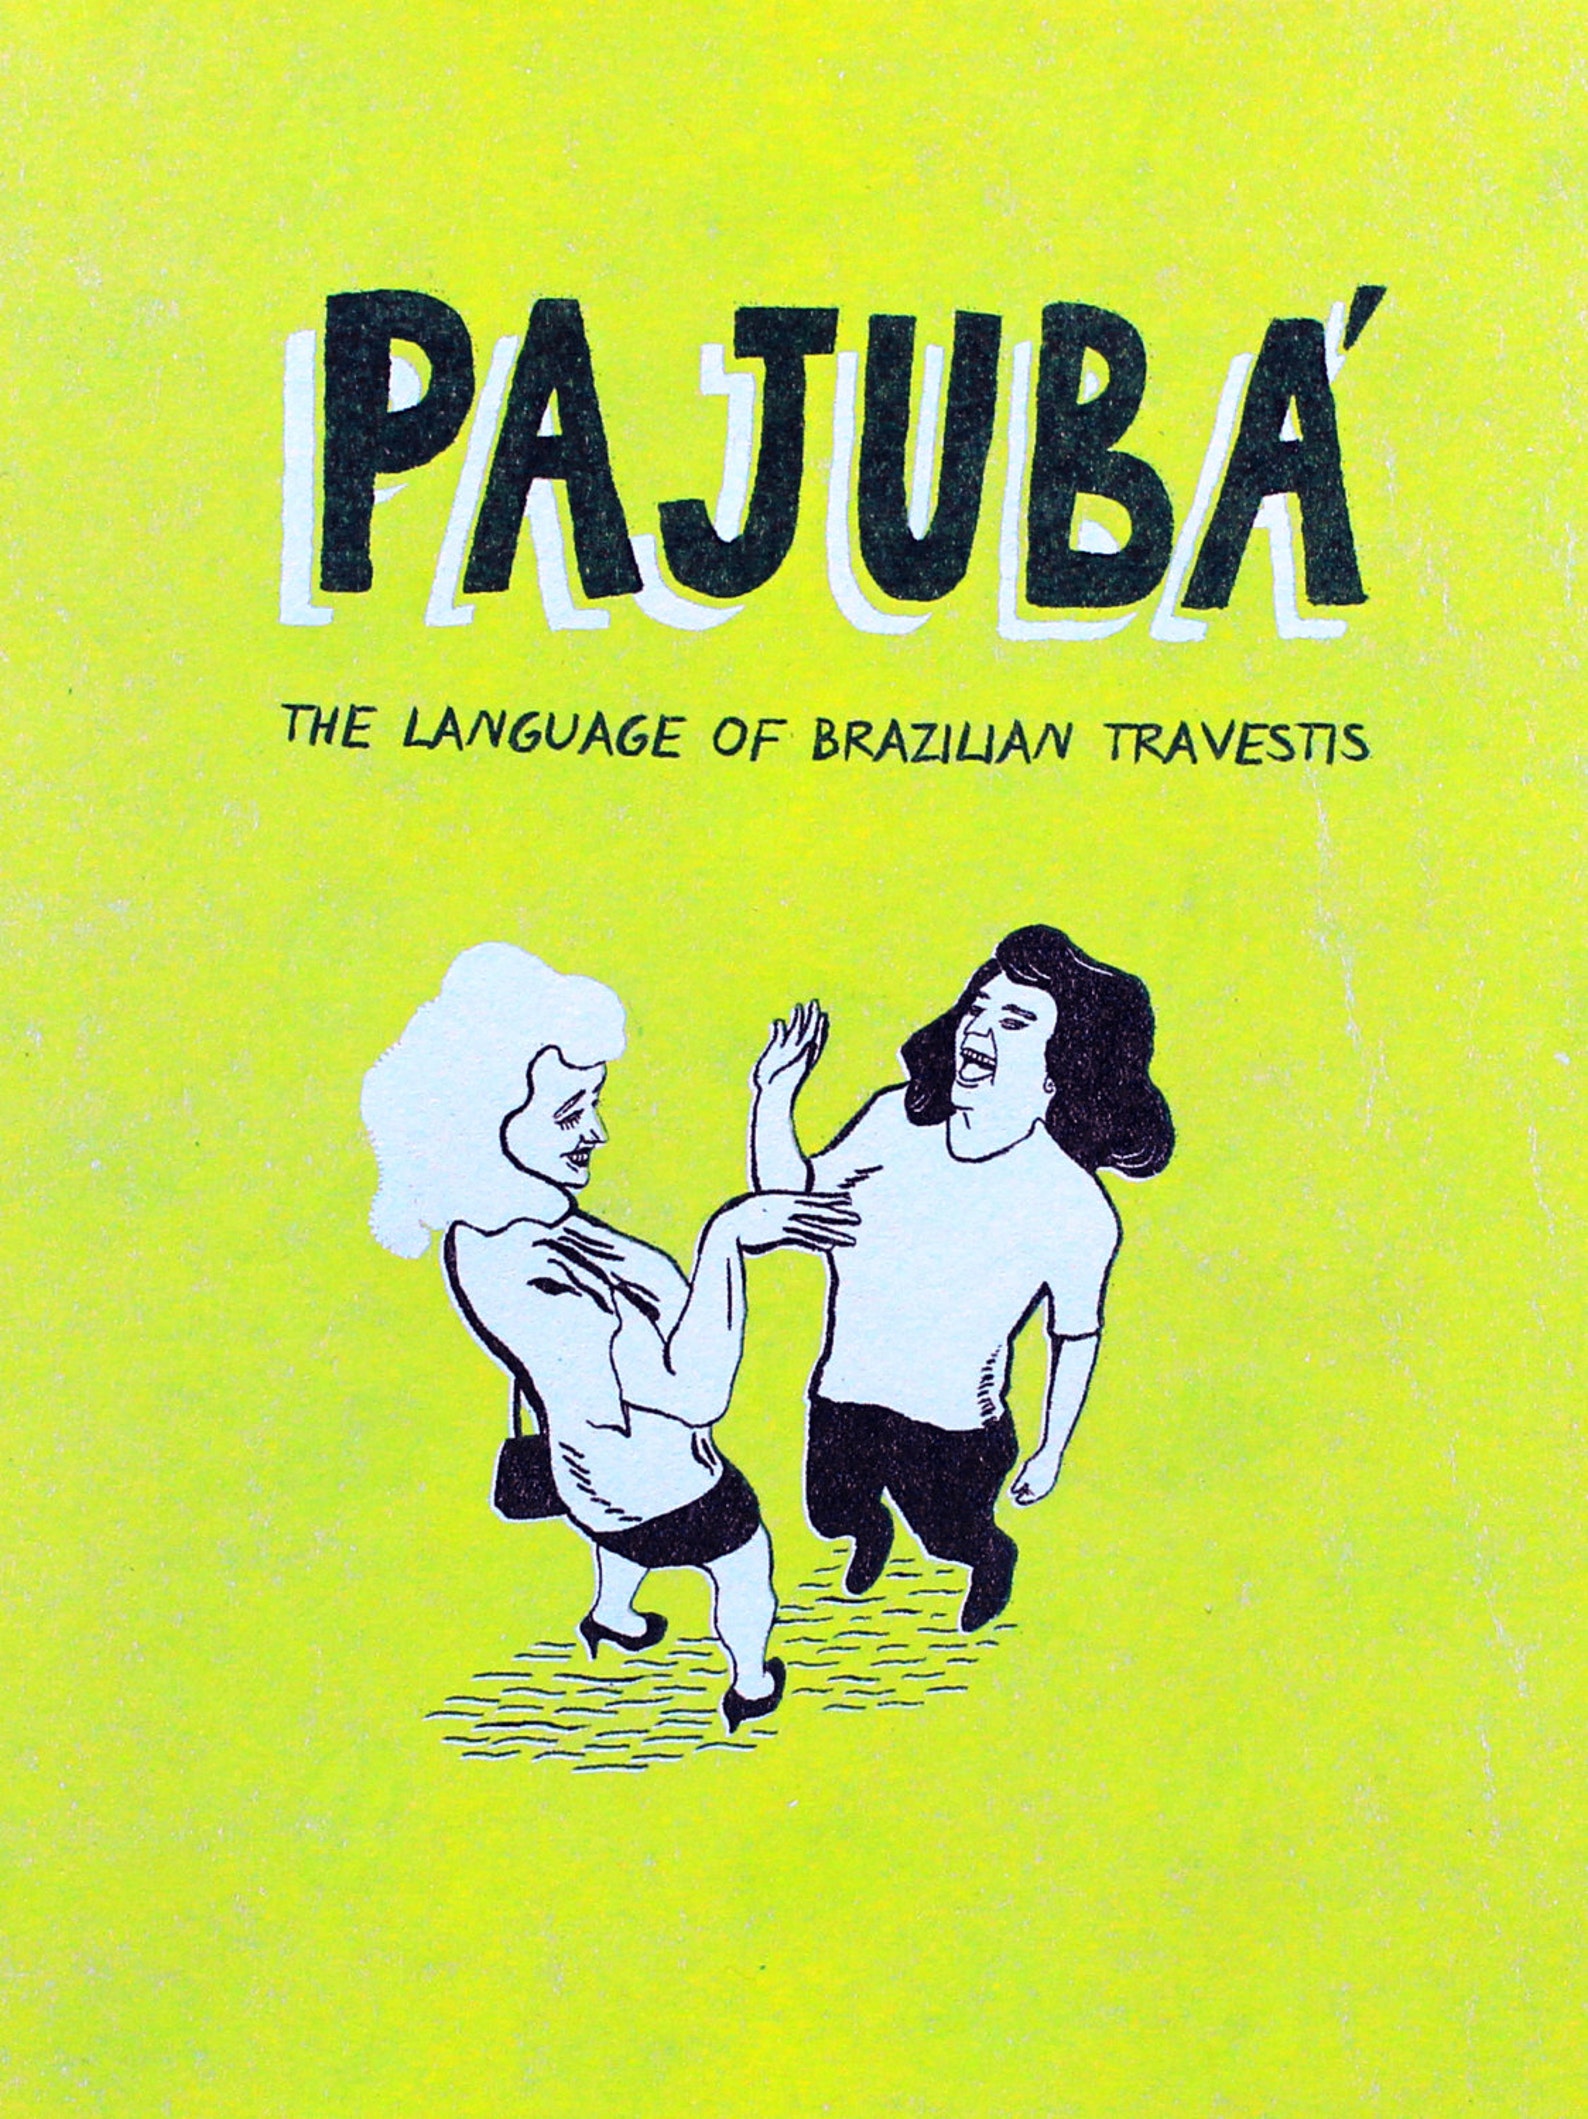 illustration of 2 people talking on yellow background